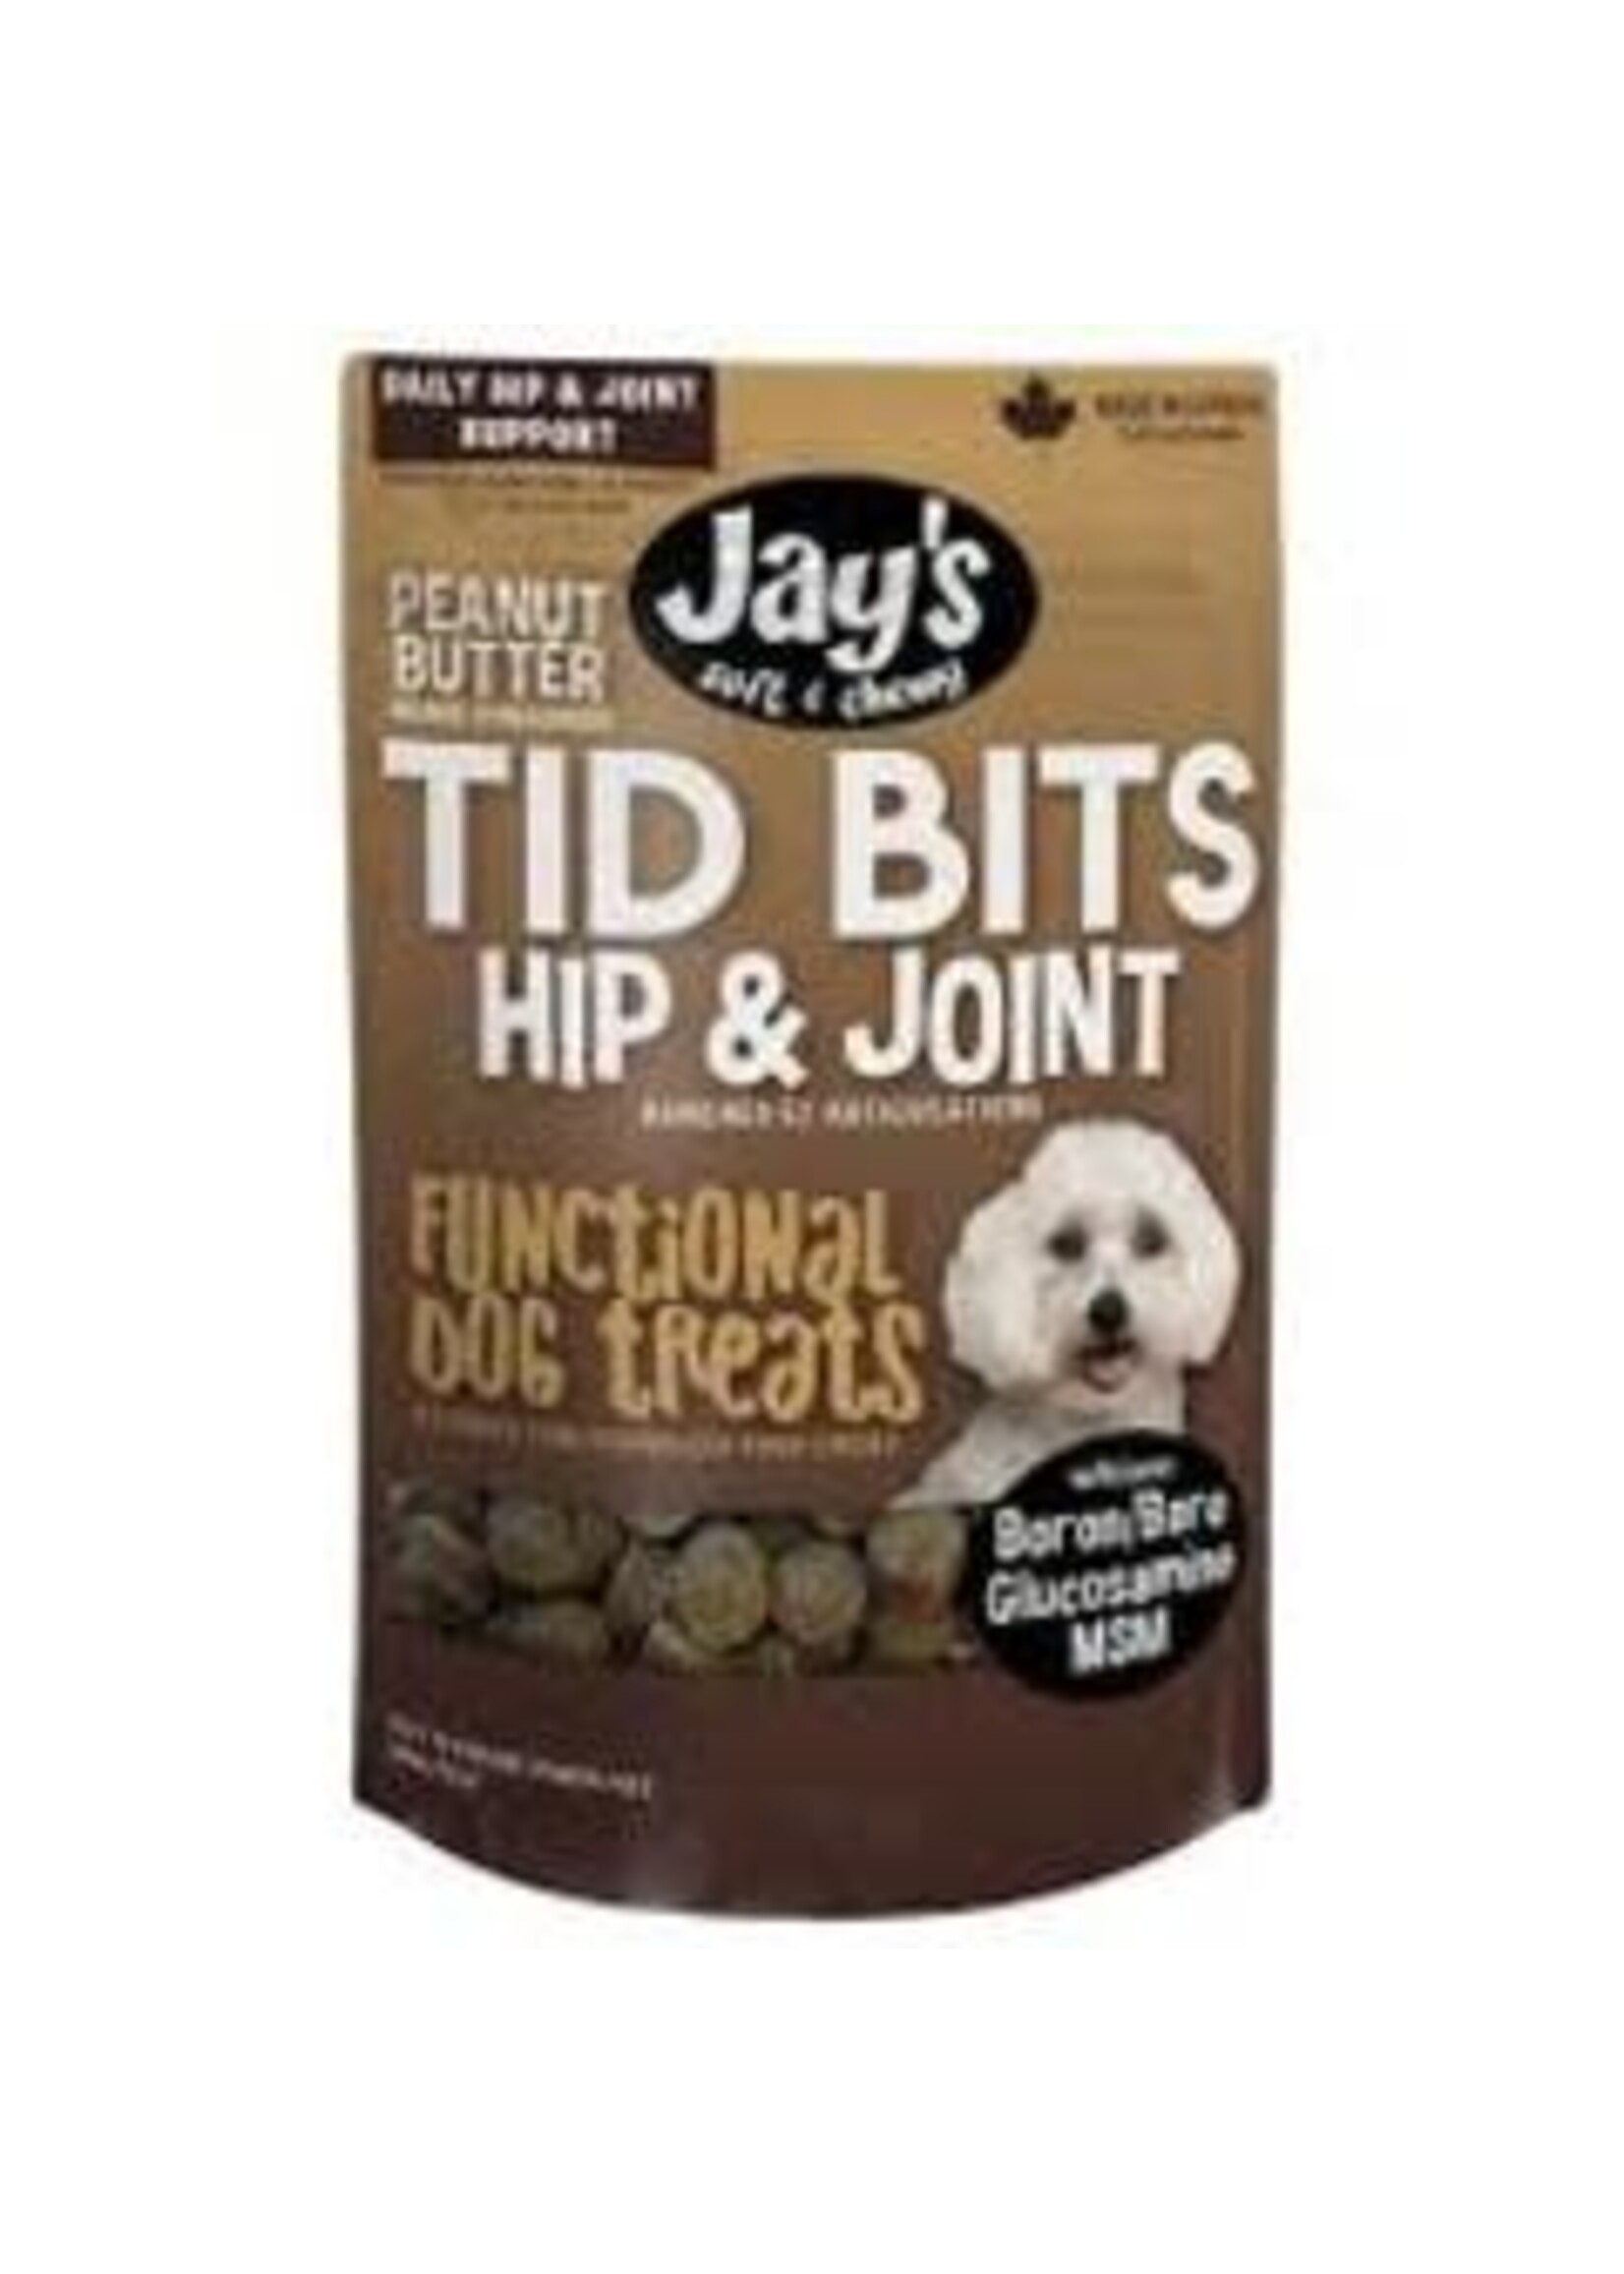 Jay's Jay's - Tid Bits Peanut Butter Hip & Joint 200g